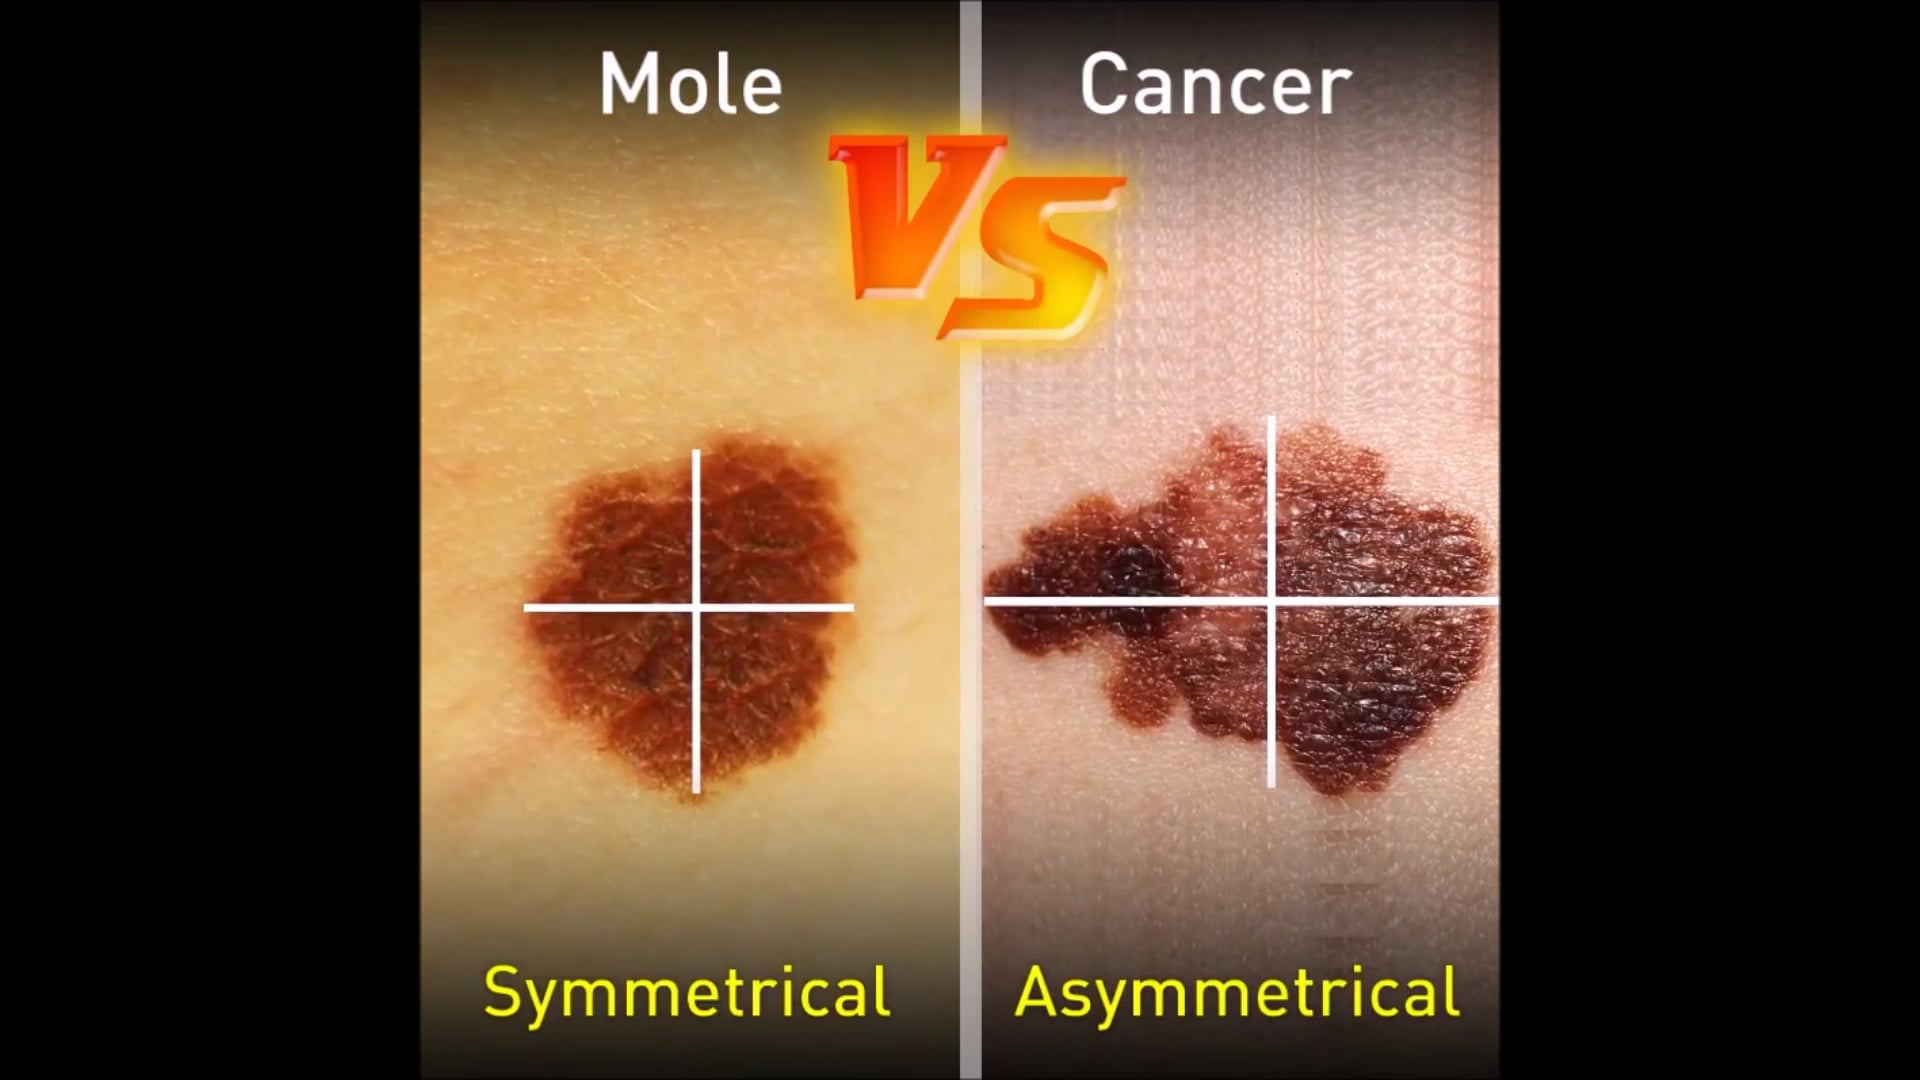 Mole vs Cancer